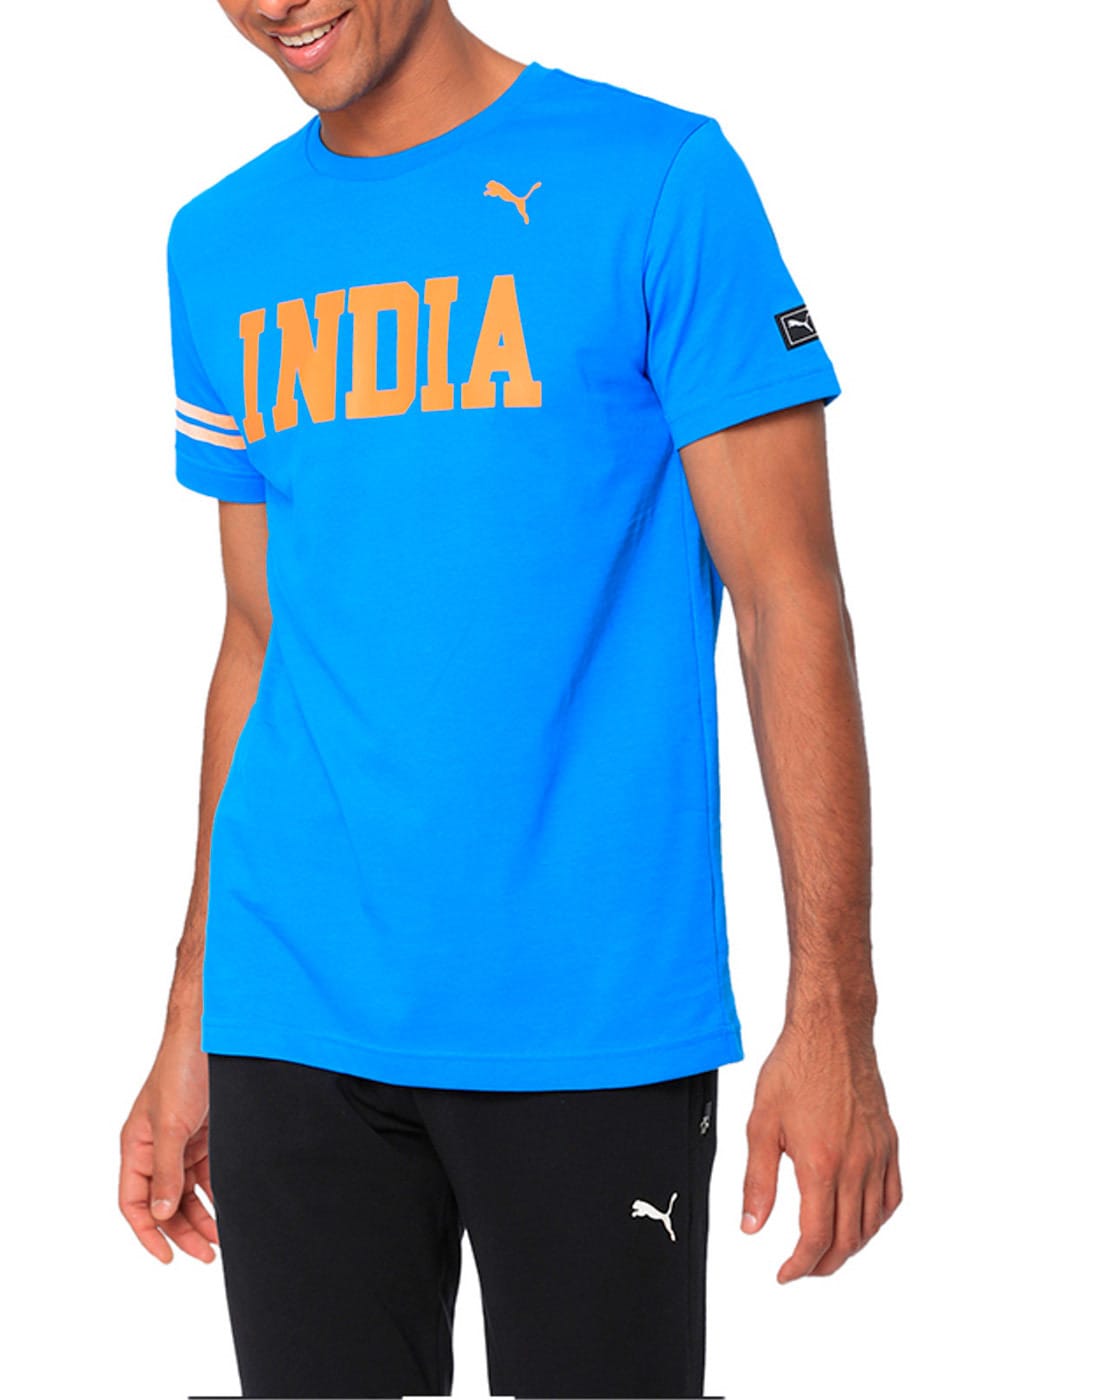 india team t shirt online